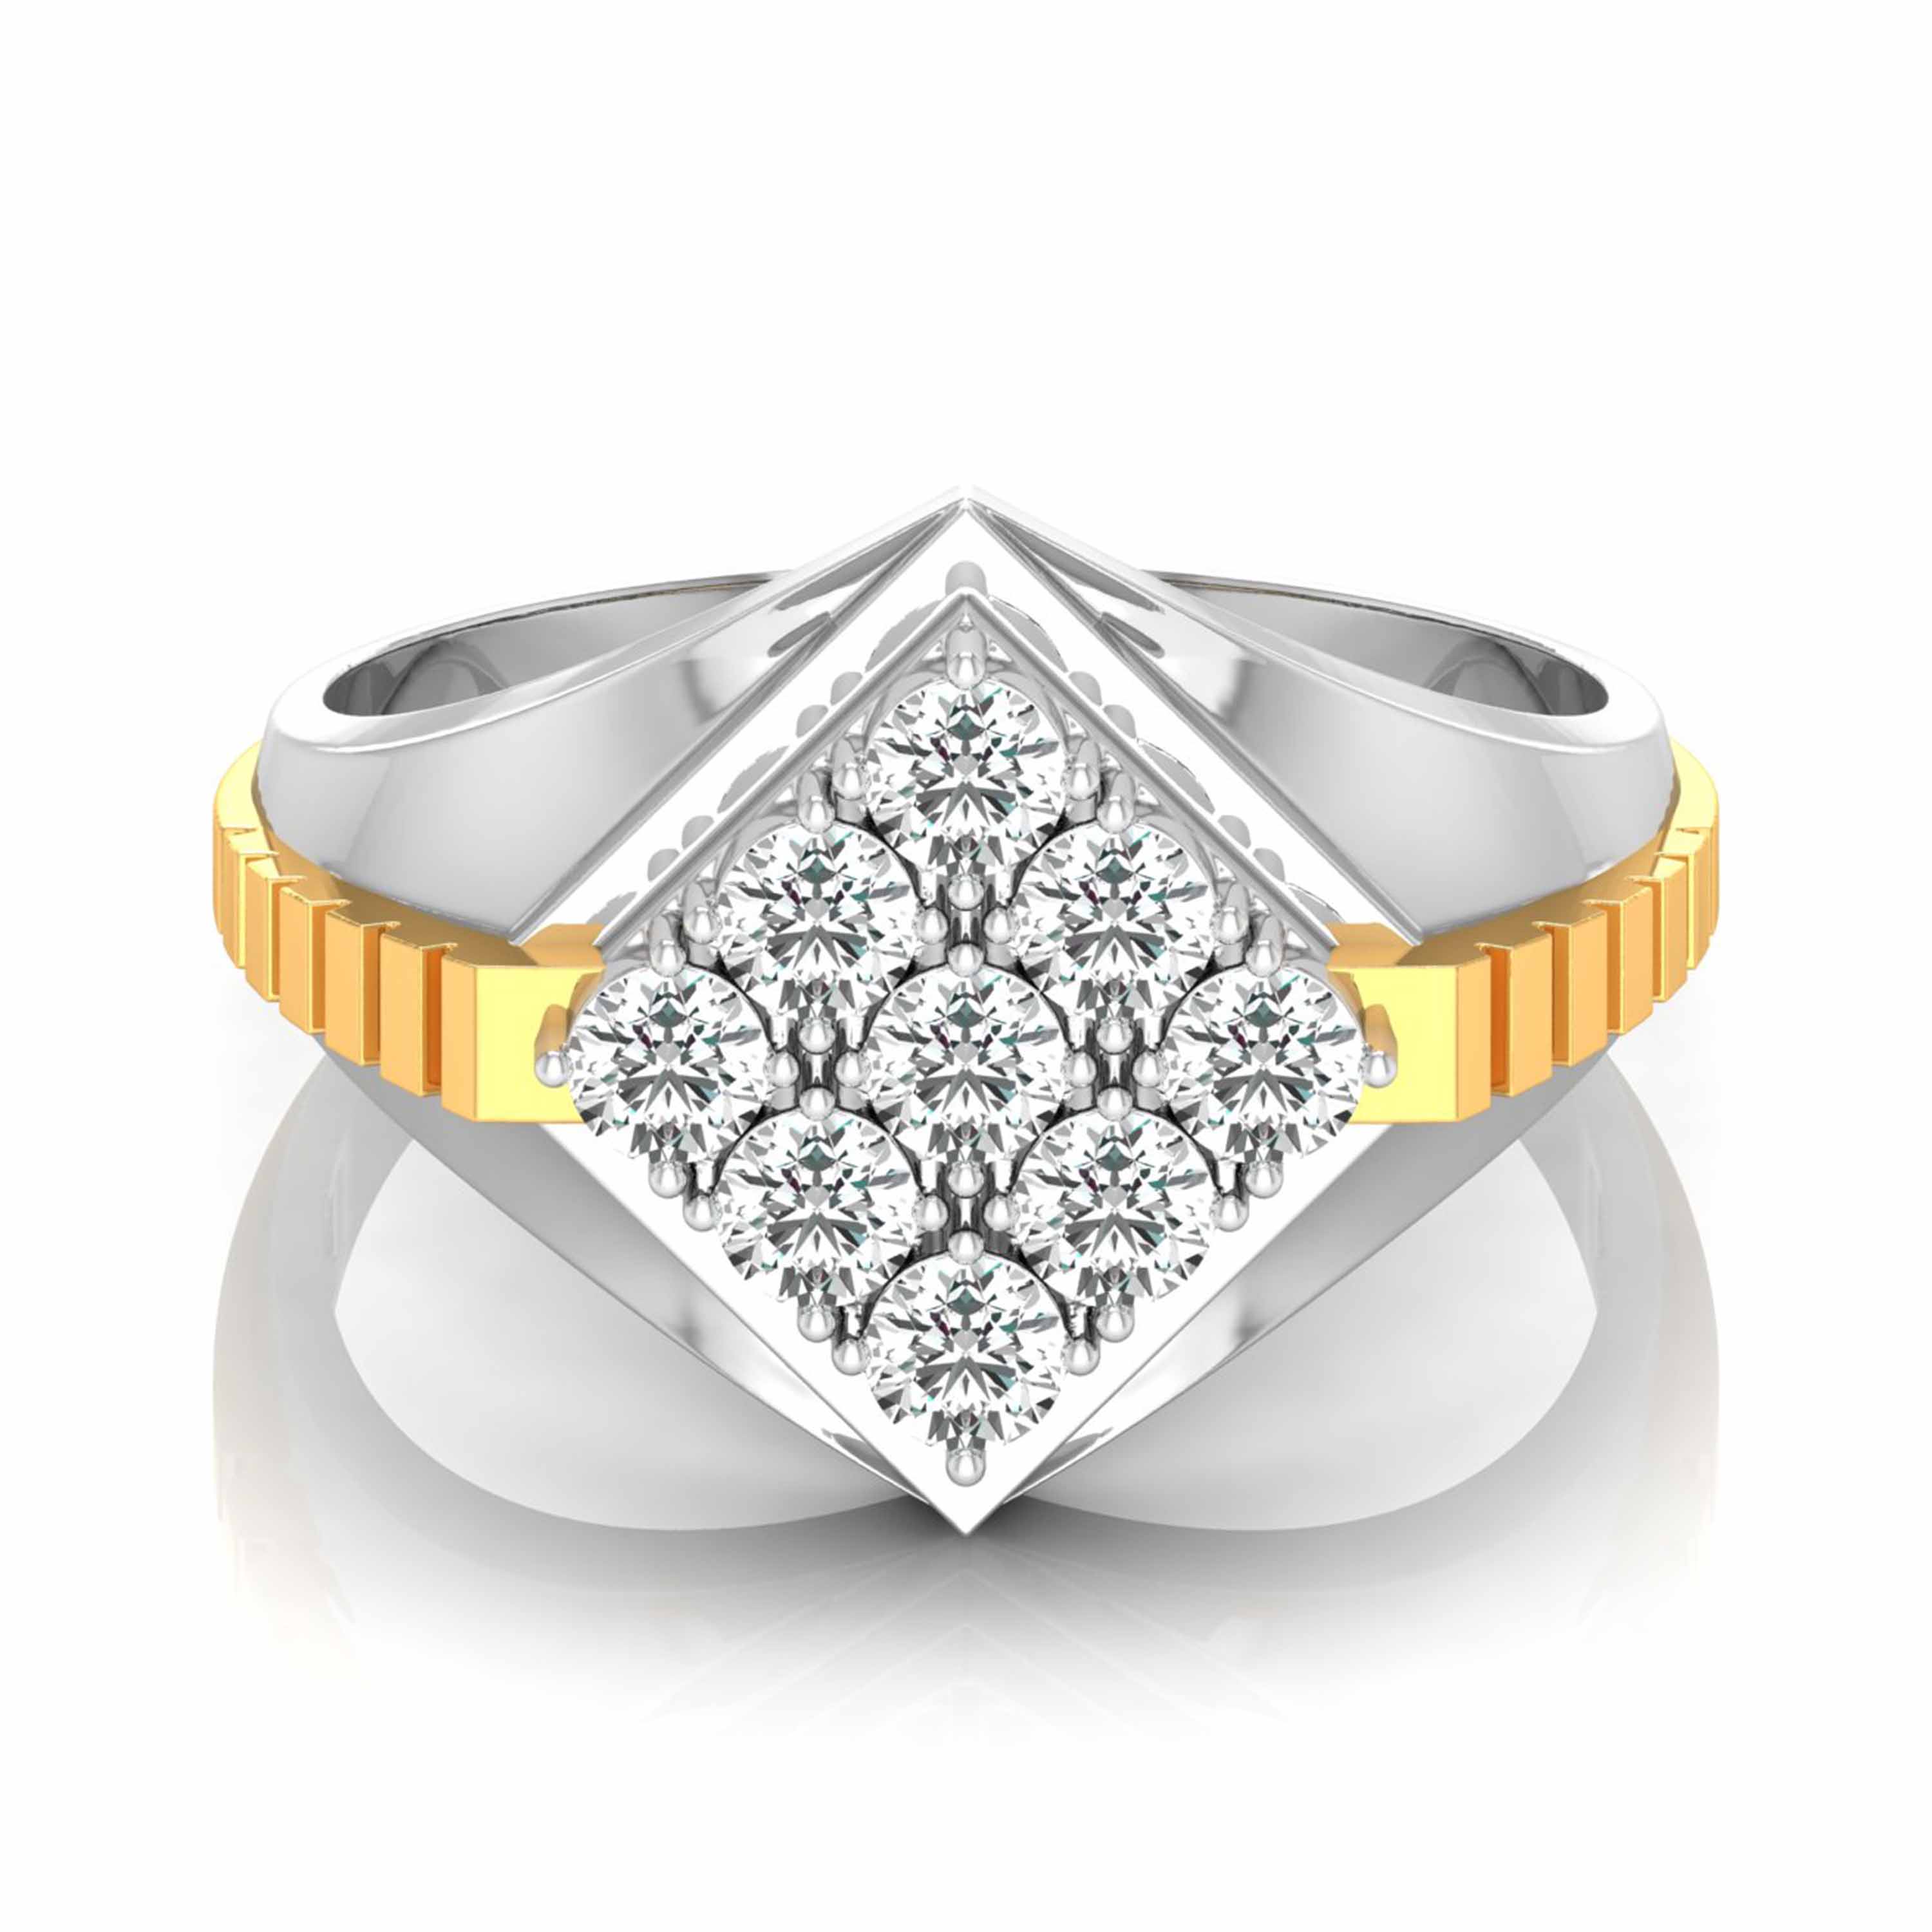 silver ring design for men 2022 || Silver ring design for men @a.jgoldhouse  - YouTube